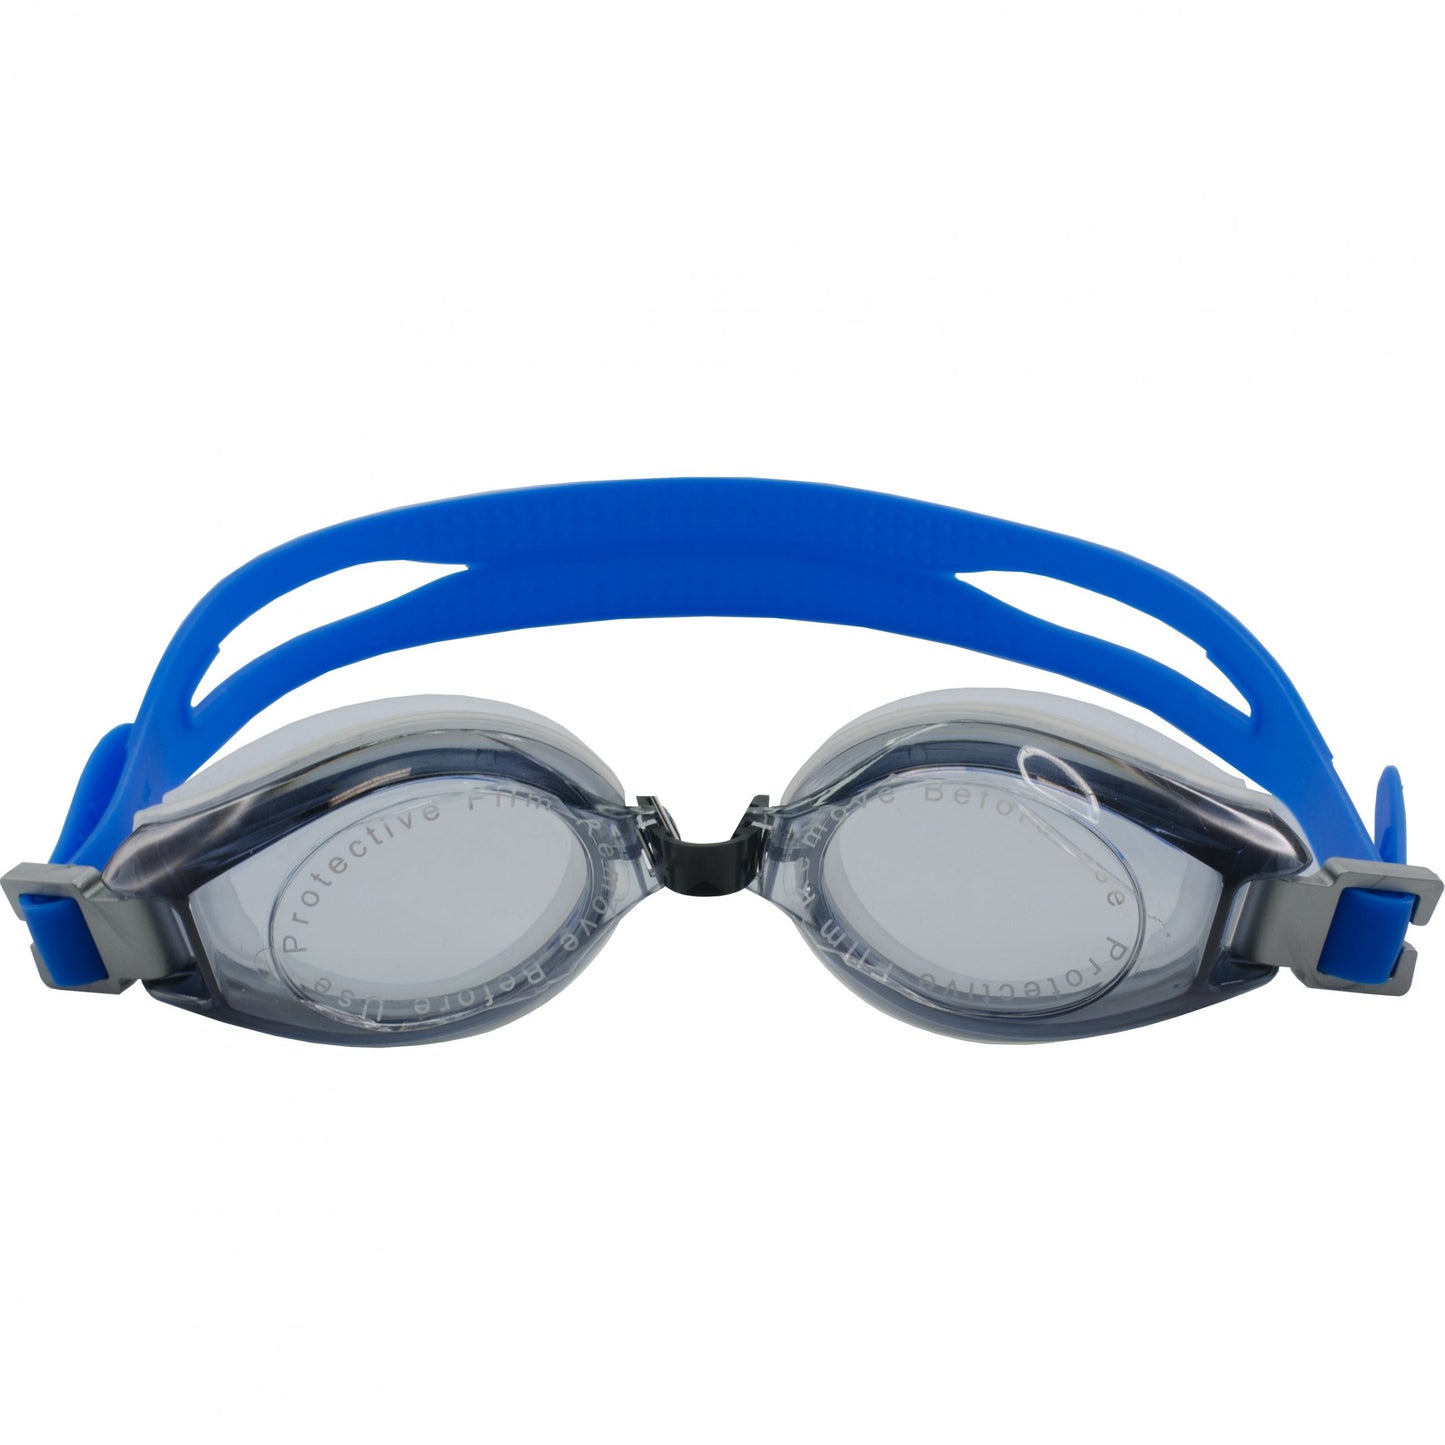 Adult Swimming Goggles with Prescription